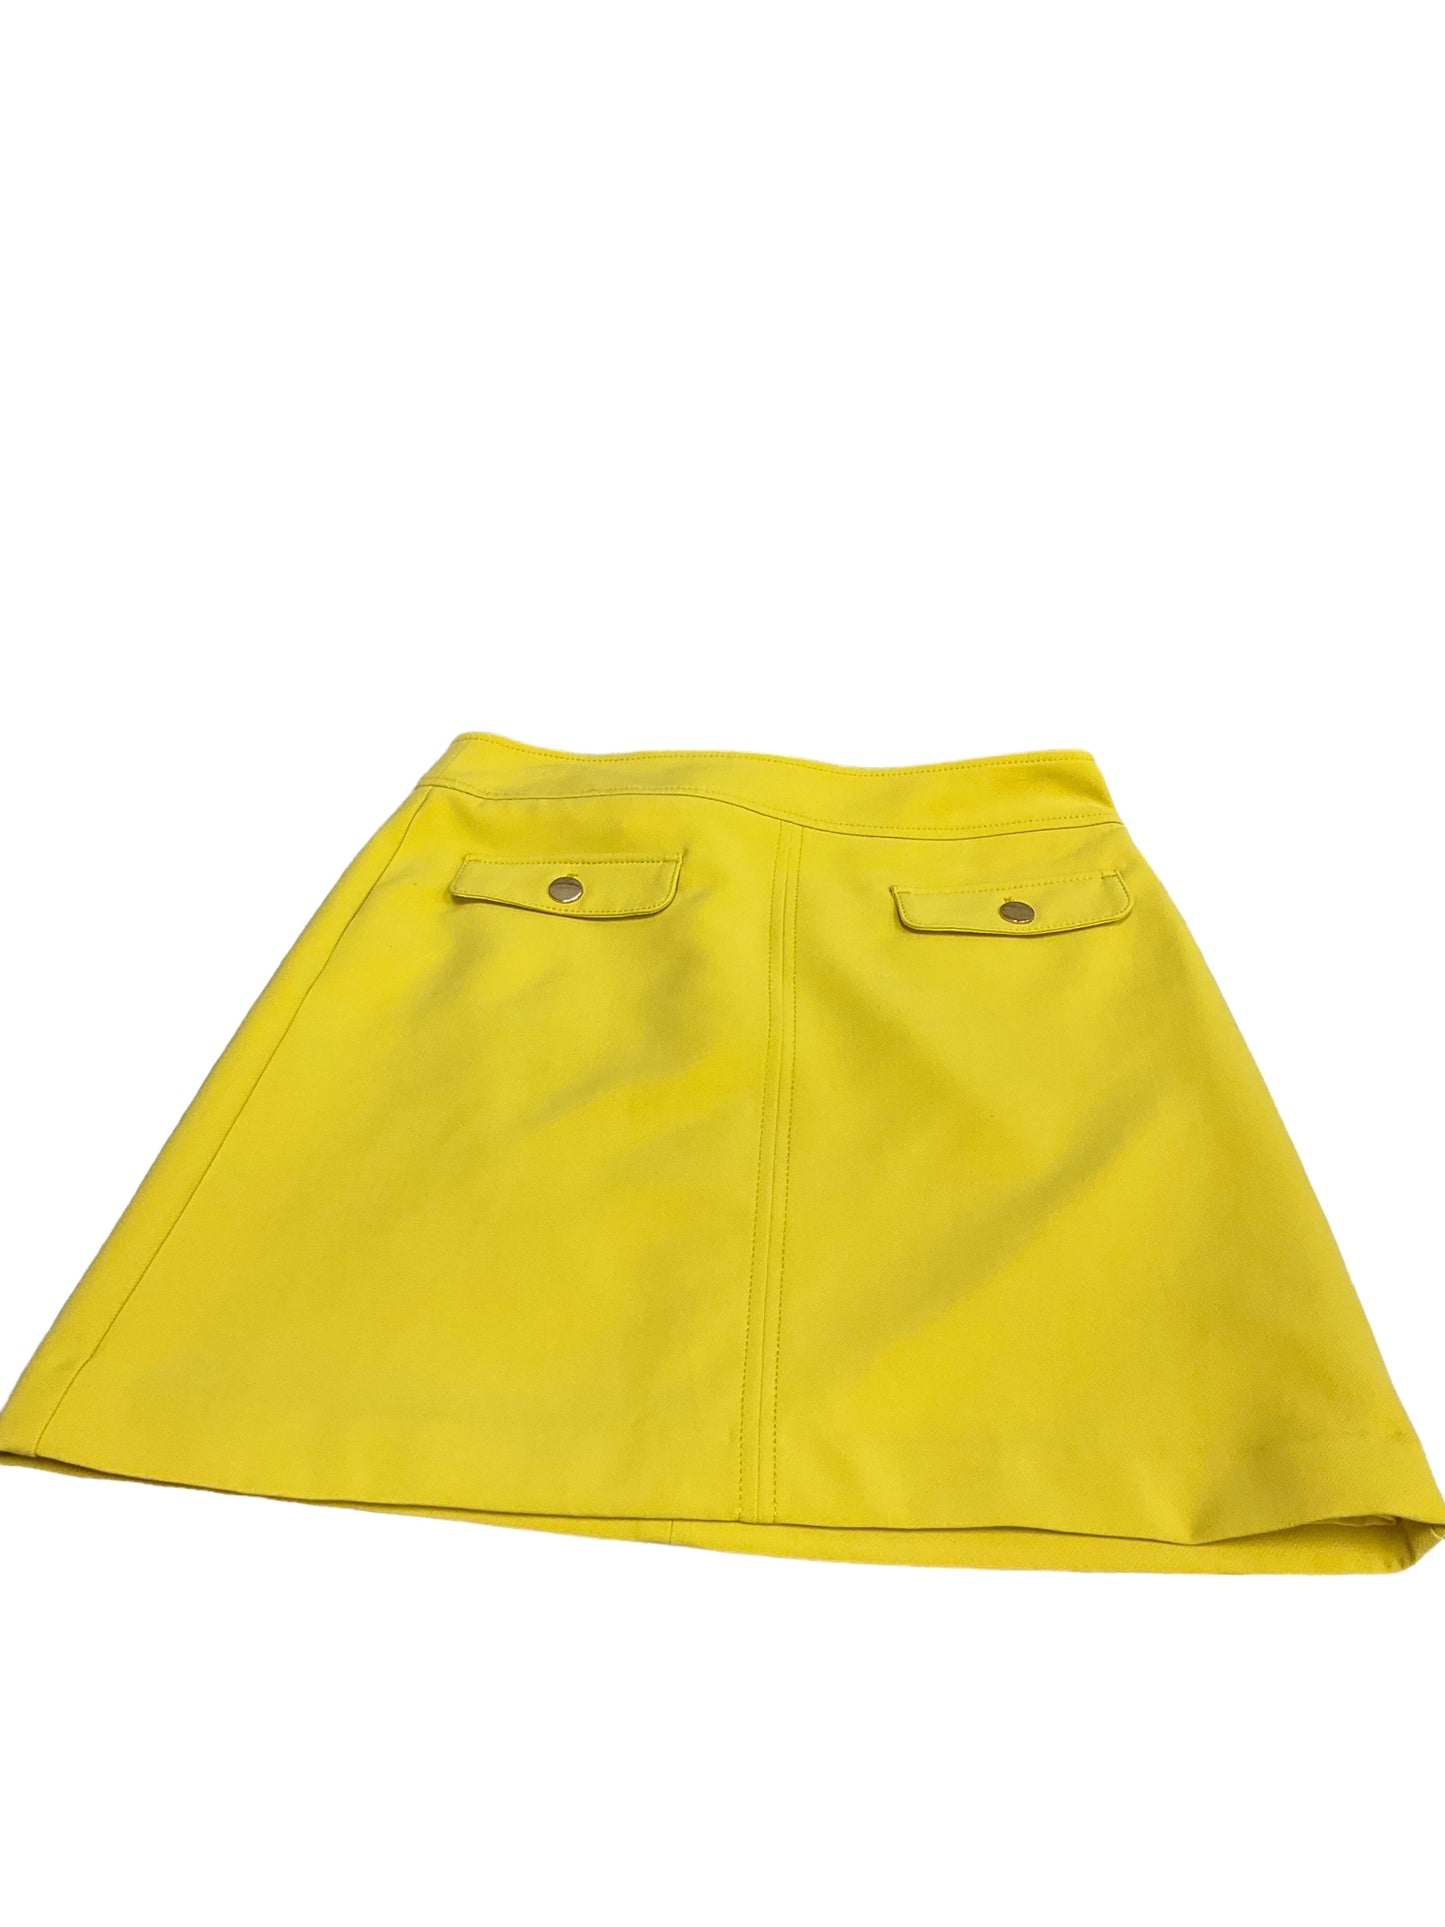 Skirt Midi By Loft  Size: 4